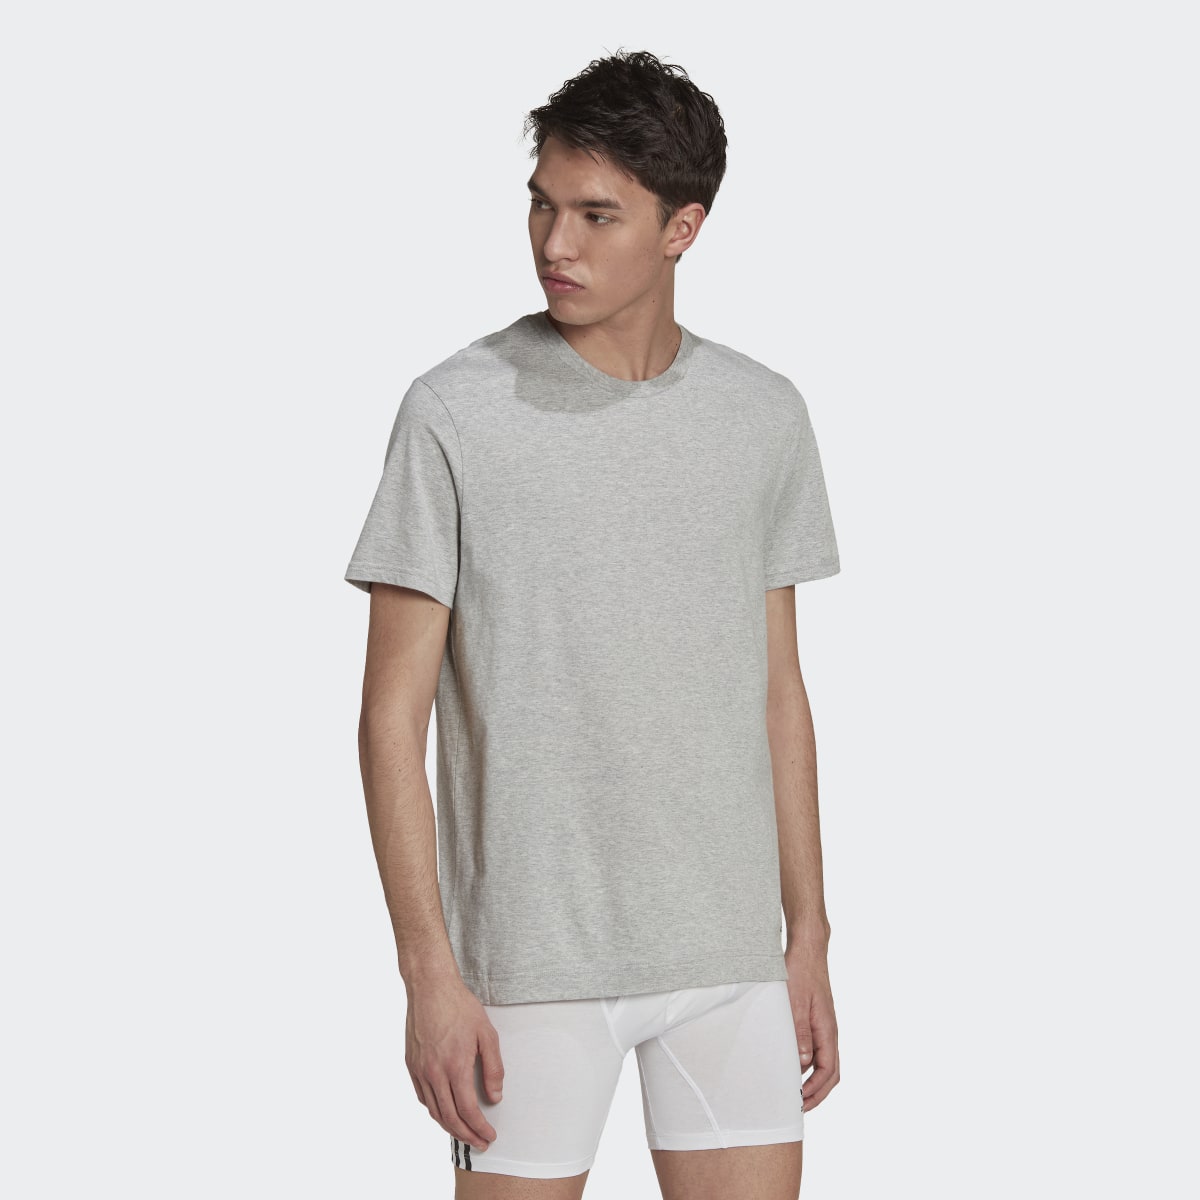 Adidas Comfort Core Cotton Crewneck T-Shirt Underwear. 4